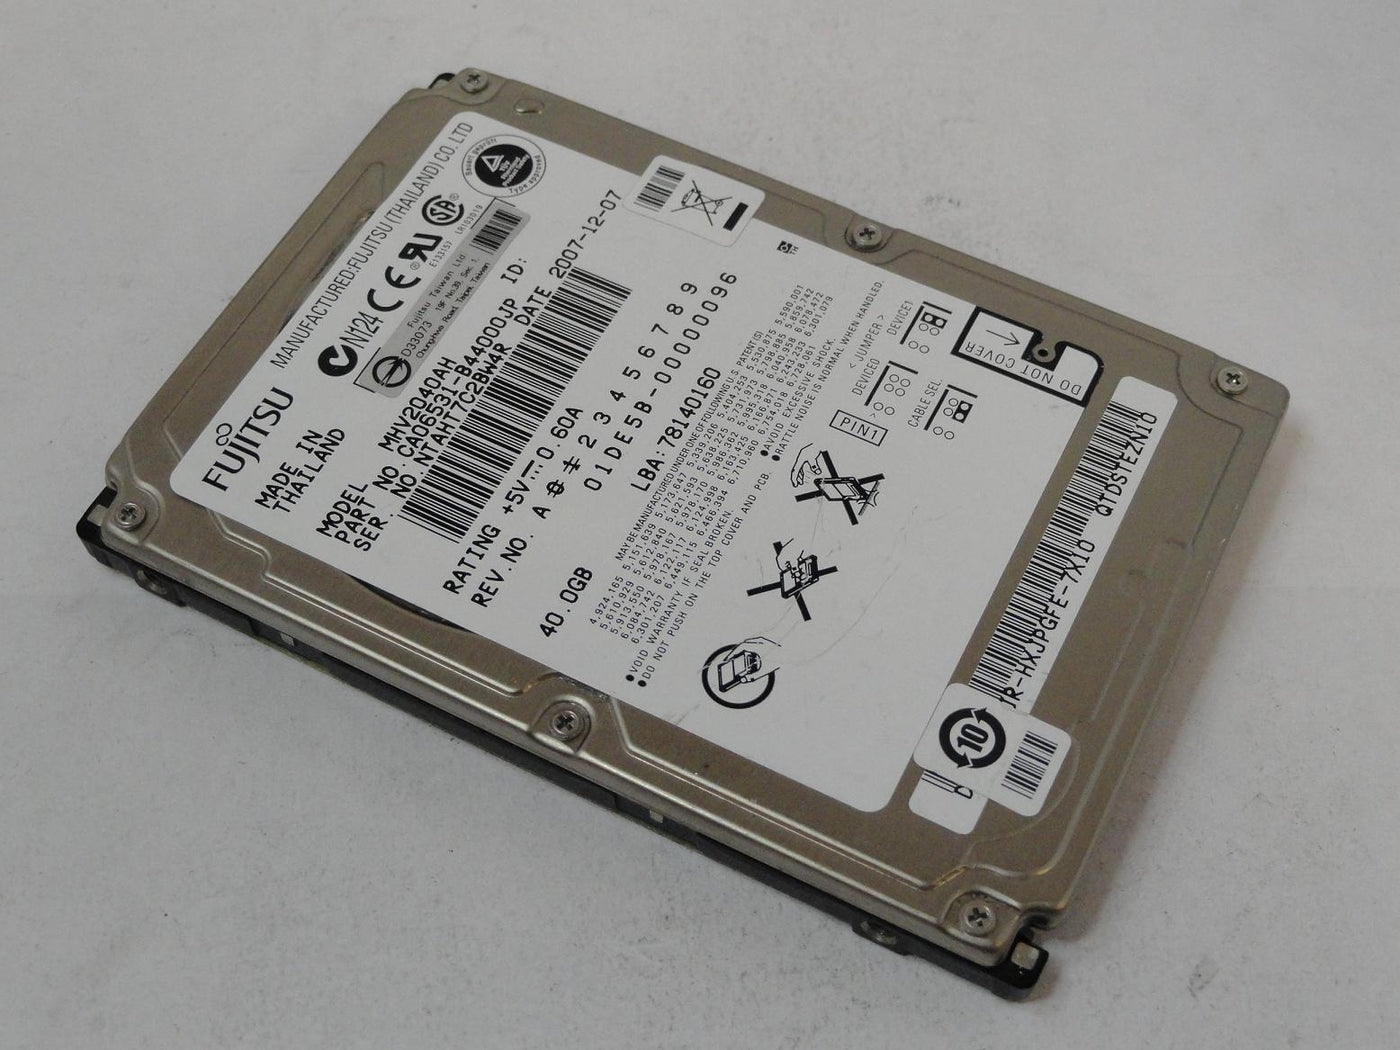 CA06531-B44000JP - Fujitsu 40GB IDE 5400rpm 2.5in HDD - Refurbished